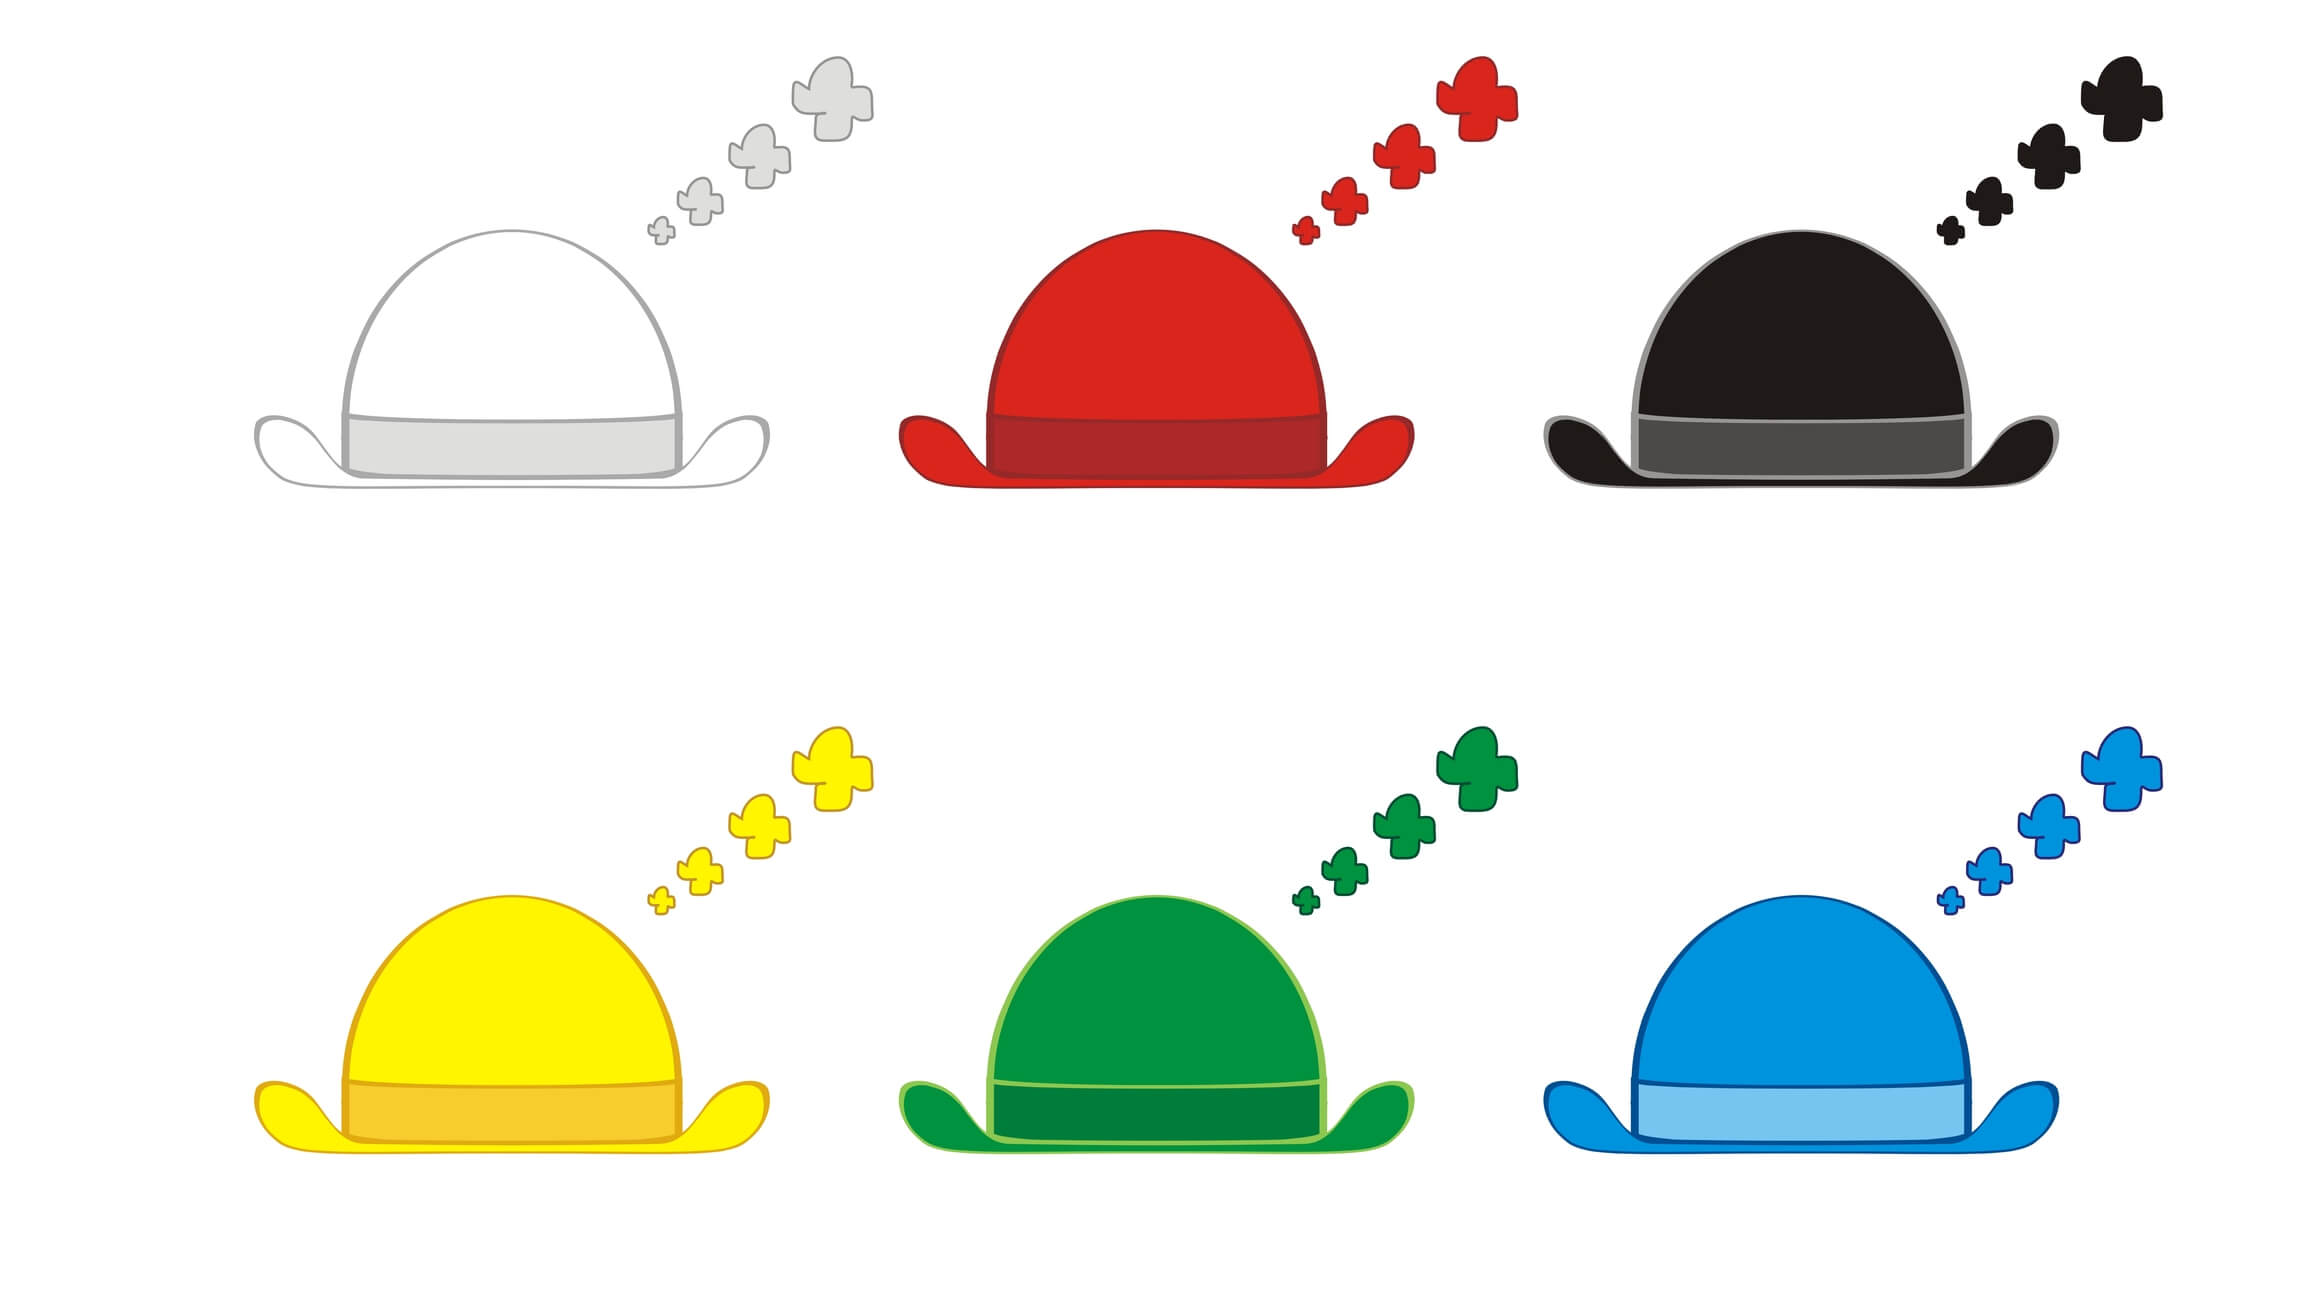 метод 6 шляп